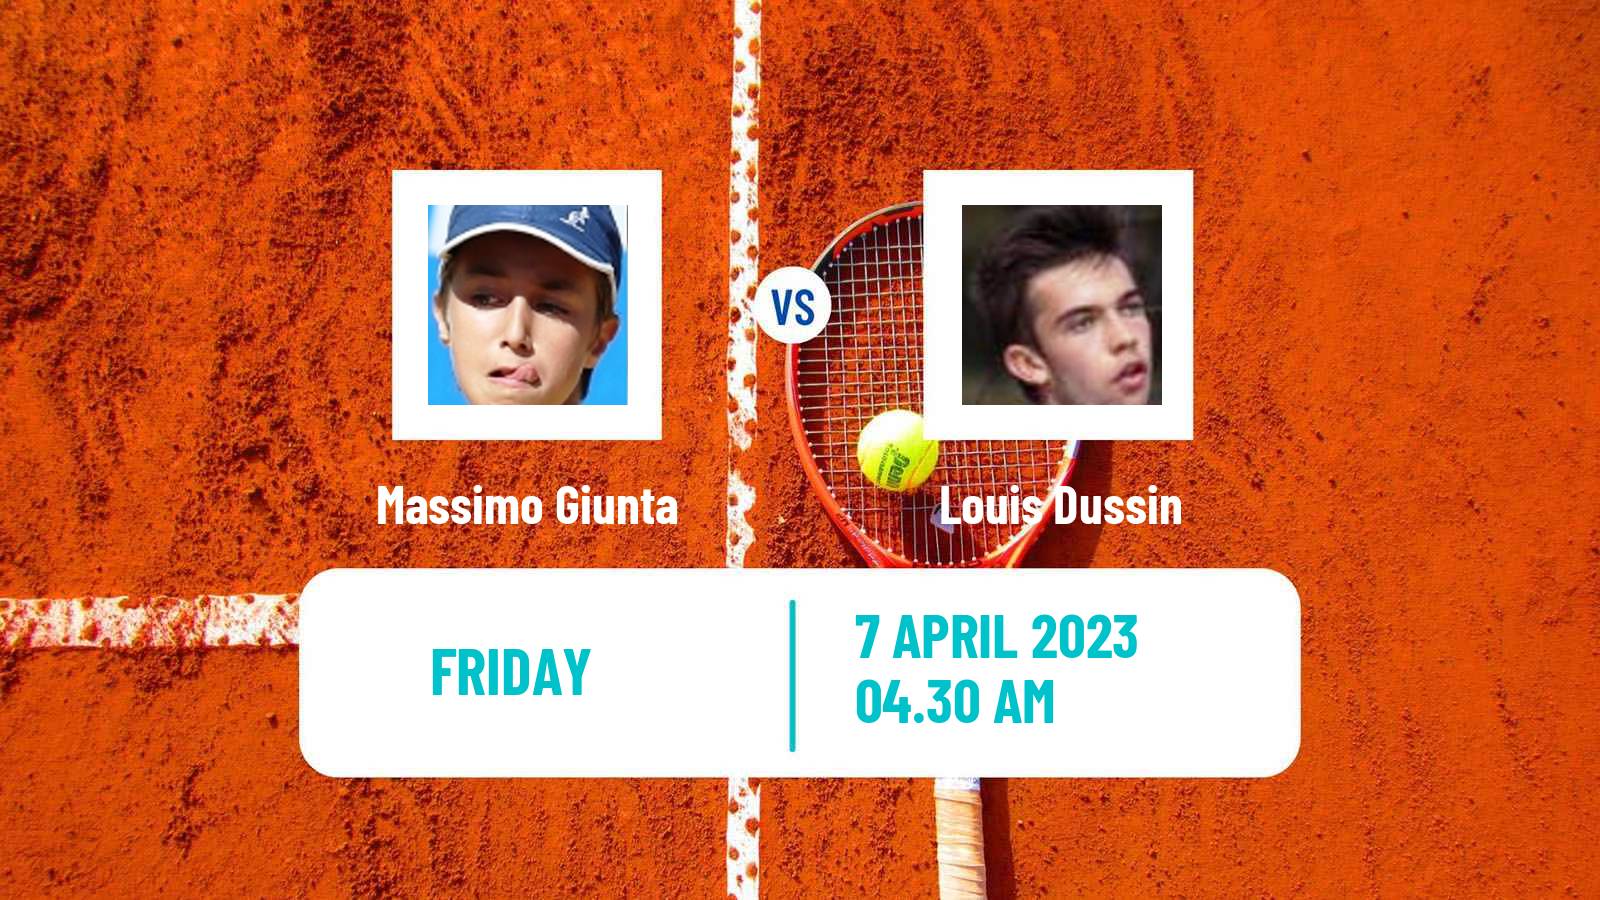 Tennis ITF Tournaments Massimo Giunta - Louis Dussin